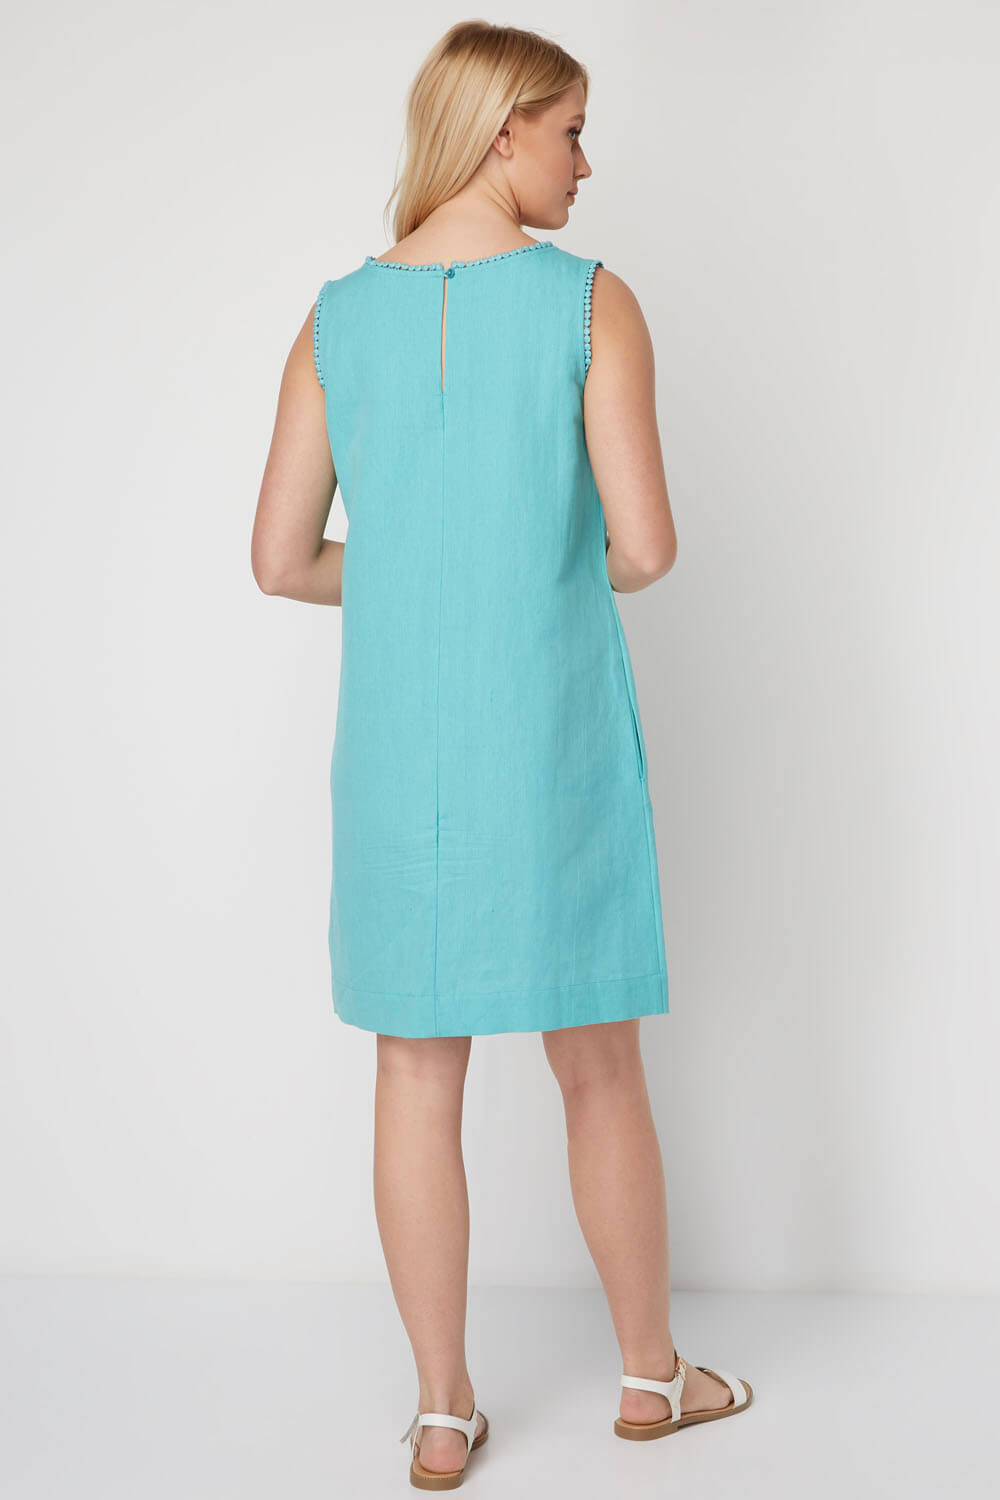 Jade Plain Shift Dress, Image 2 of 4